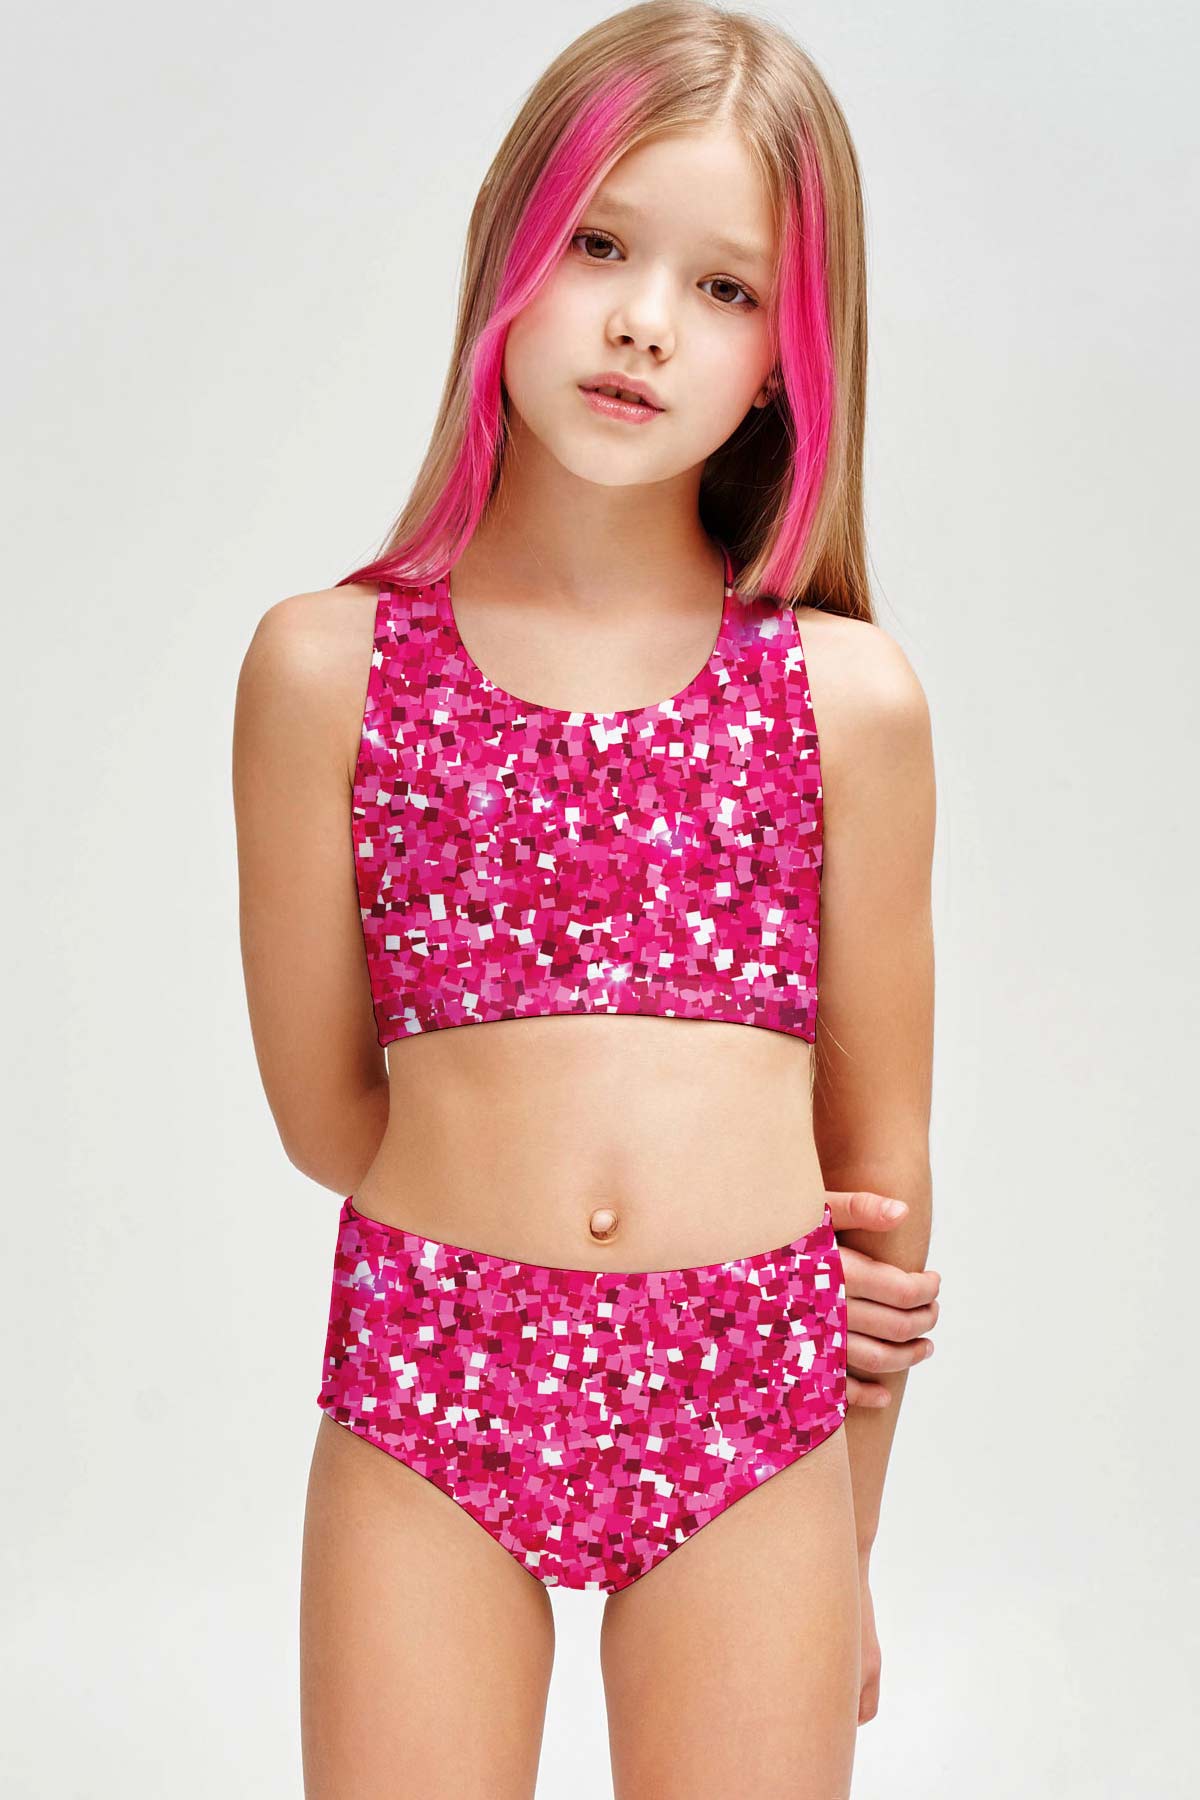 Glam Doll Claire Pink Glitter Sporty Two Piece Swim Bikini Set - Girls - Pineapple Clothing